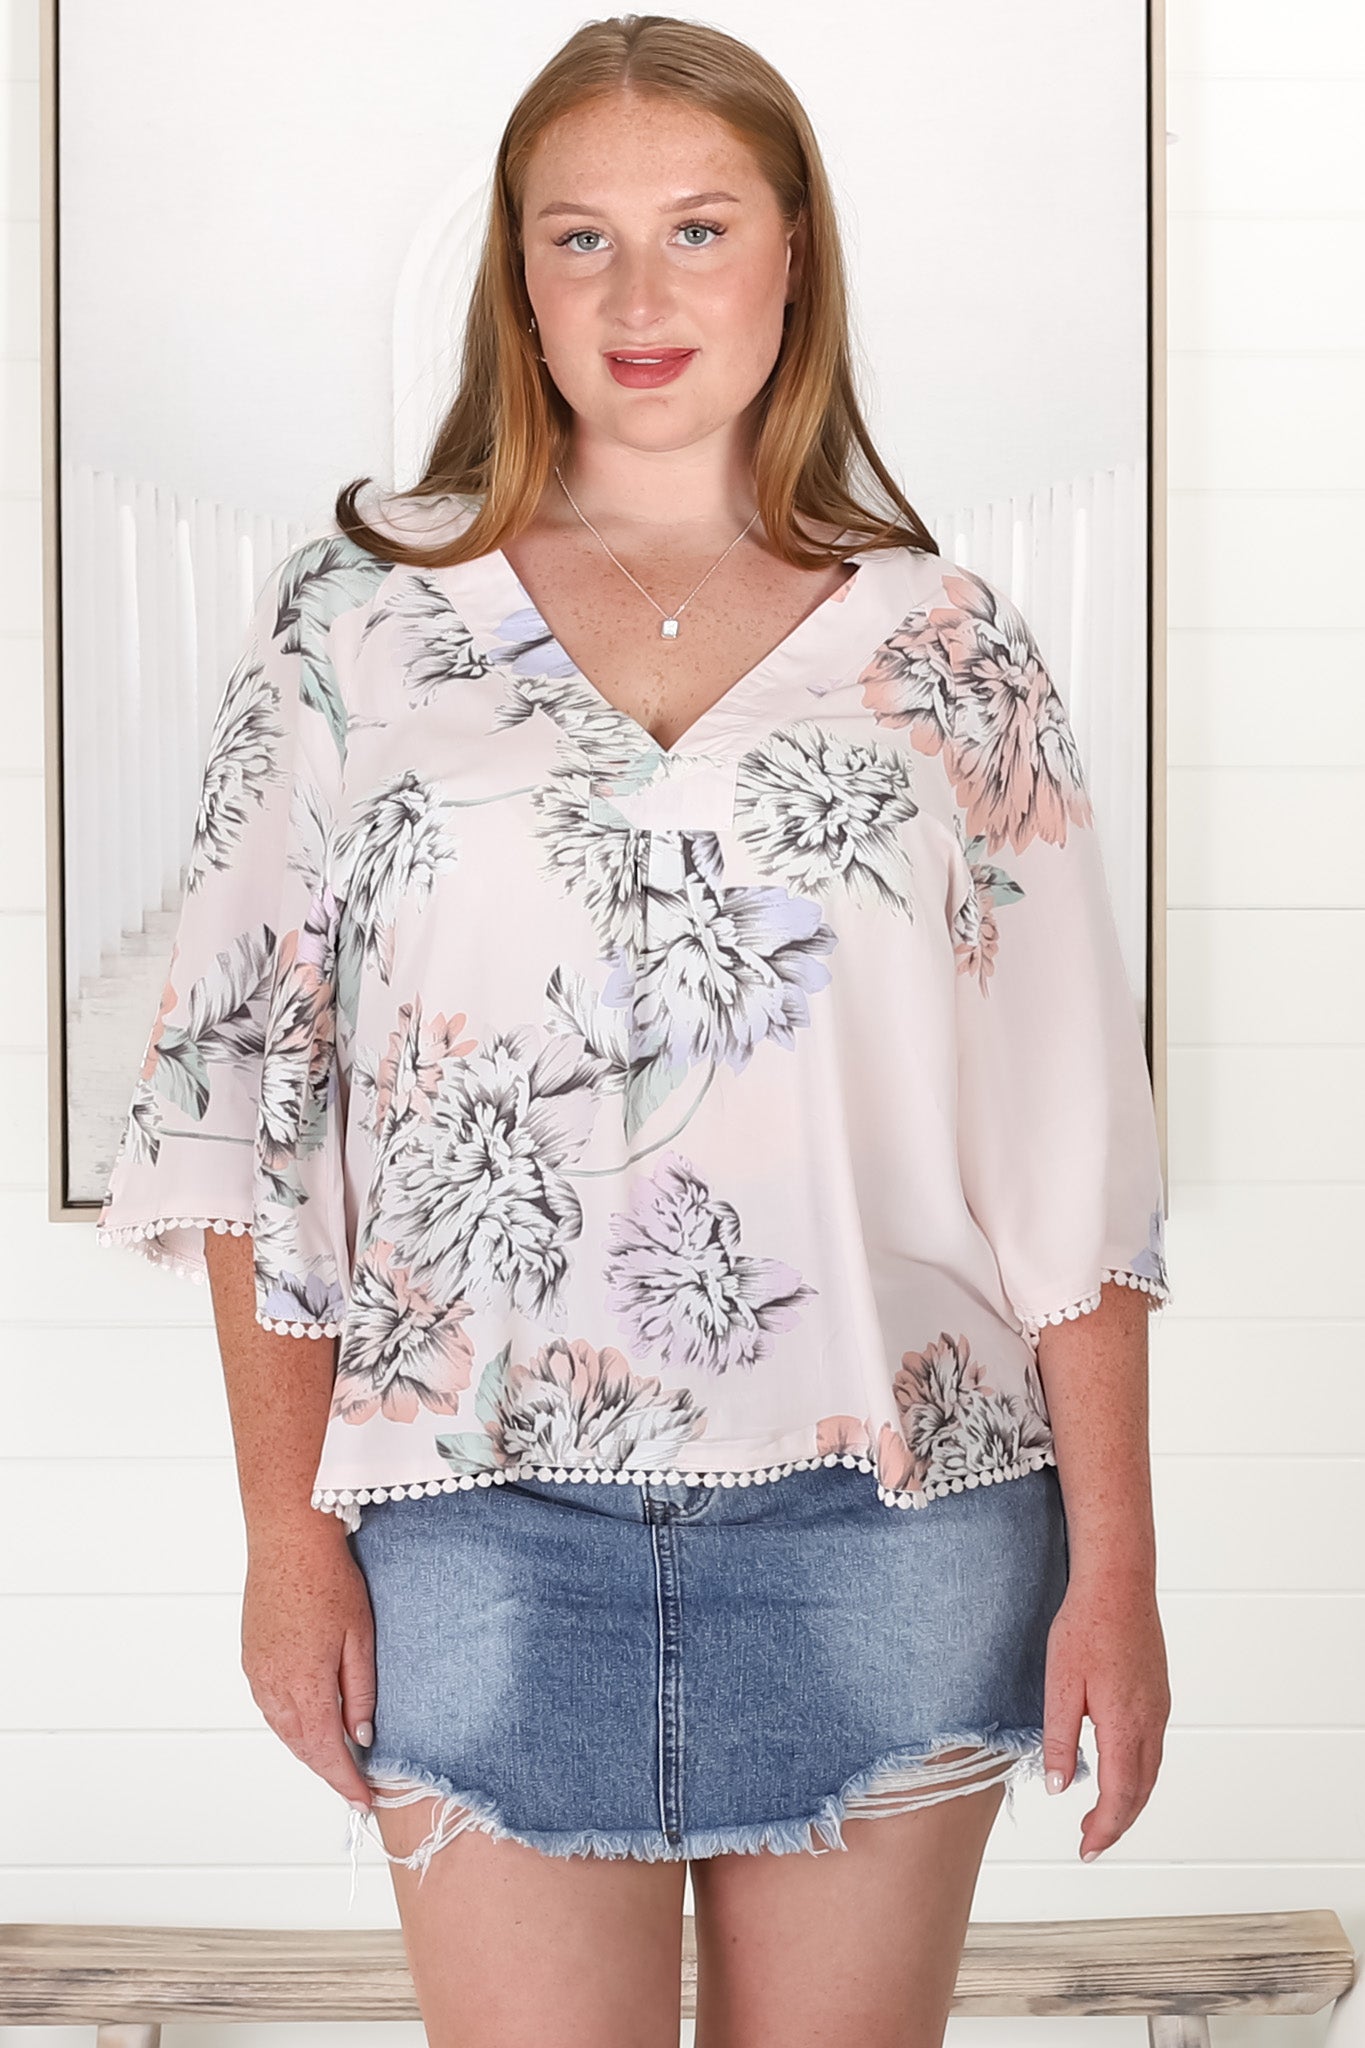 JAASE - Gabriella Top: Mandarin Collar Deep V Neck Crochet Trim Top in Blooming Bouquet Print